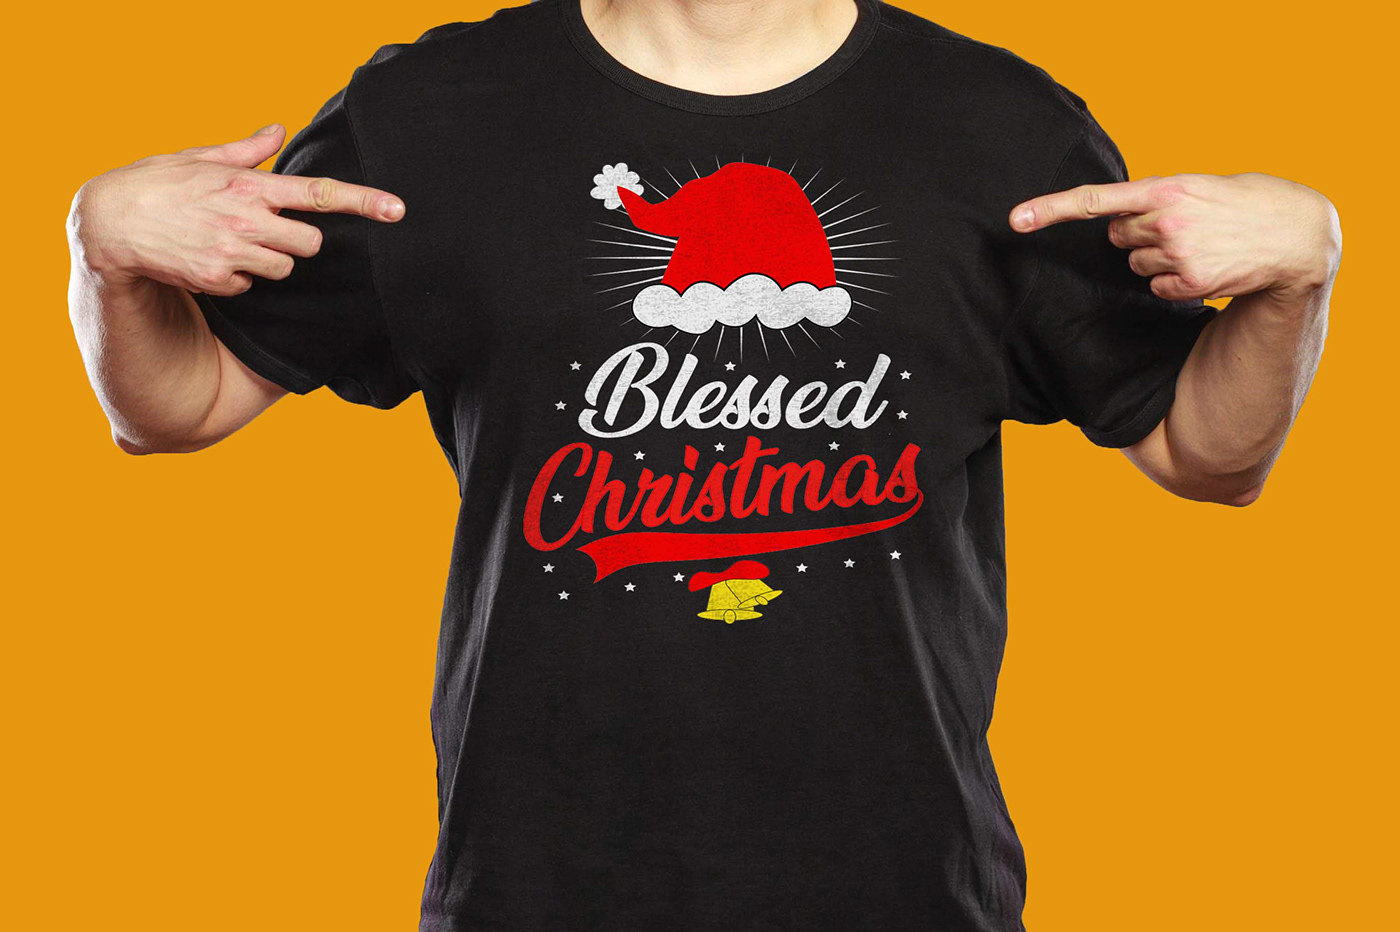 t-shirt Tshirt Design typography   Graphic Designer adobe illustrator branding  brand identity Advertising  marketing   Christmas